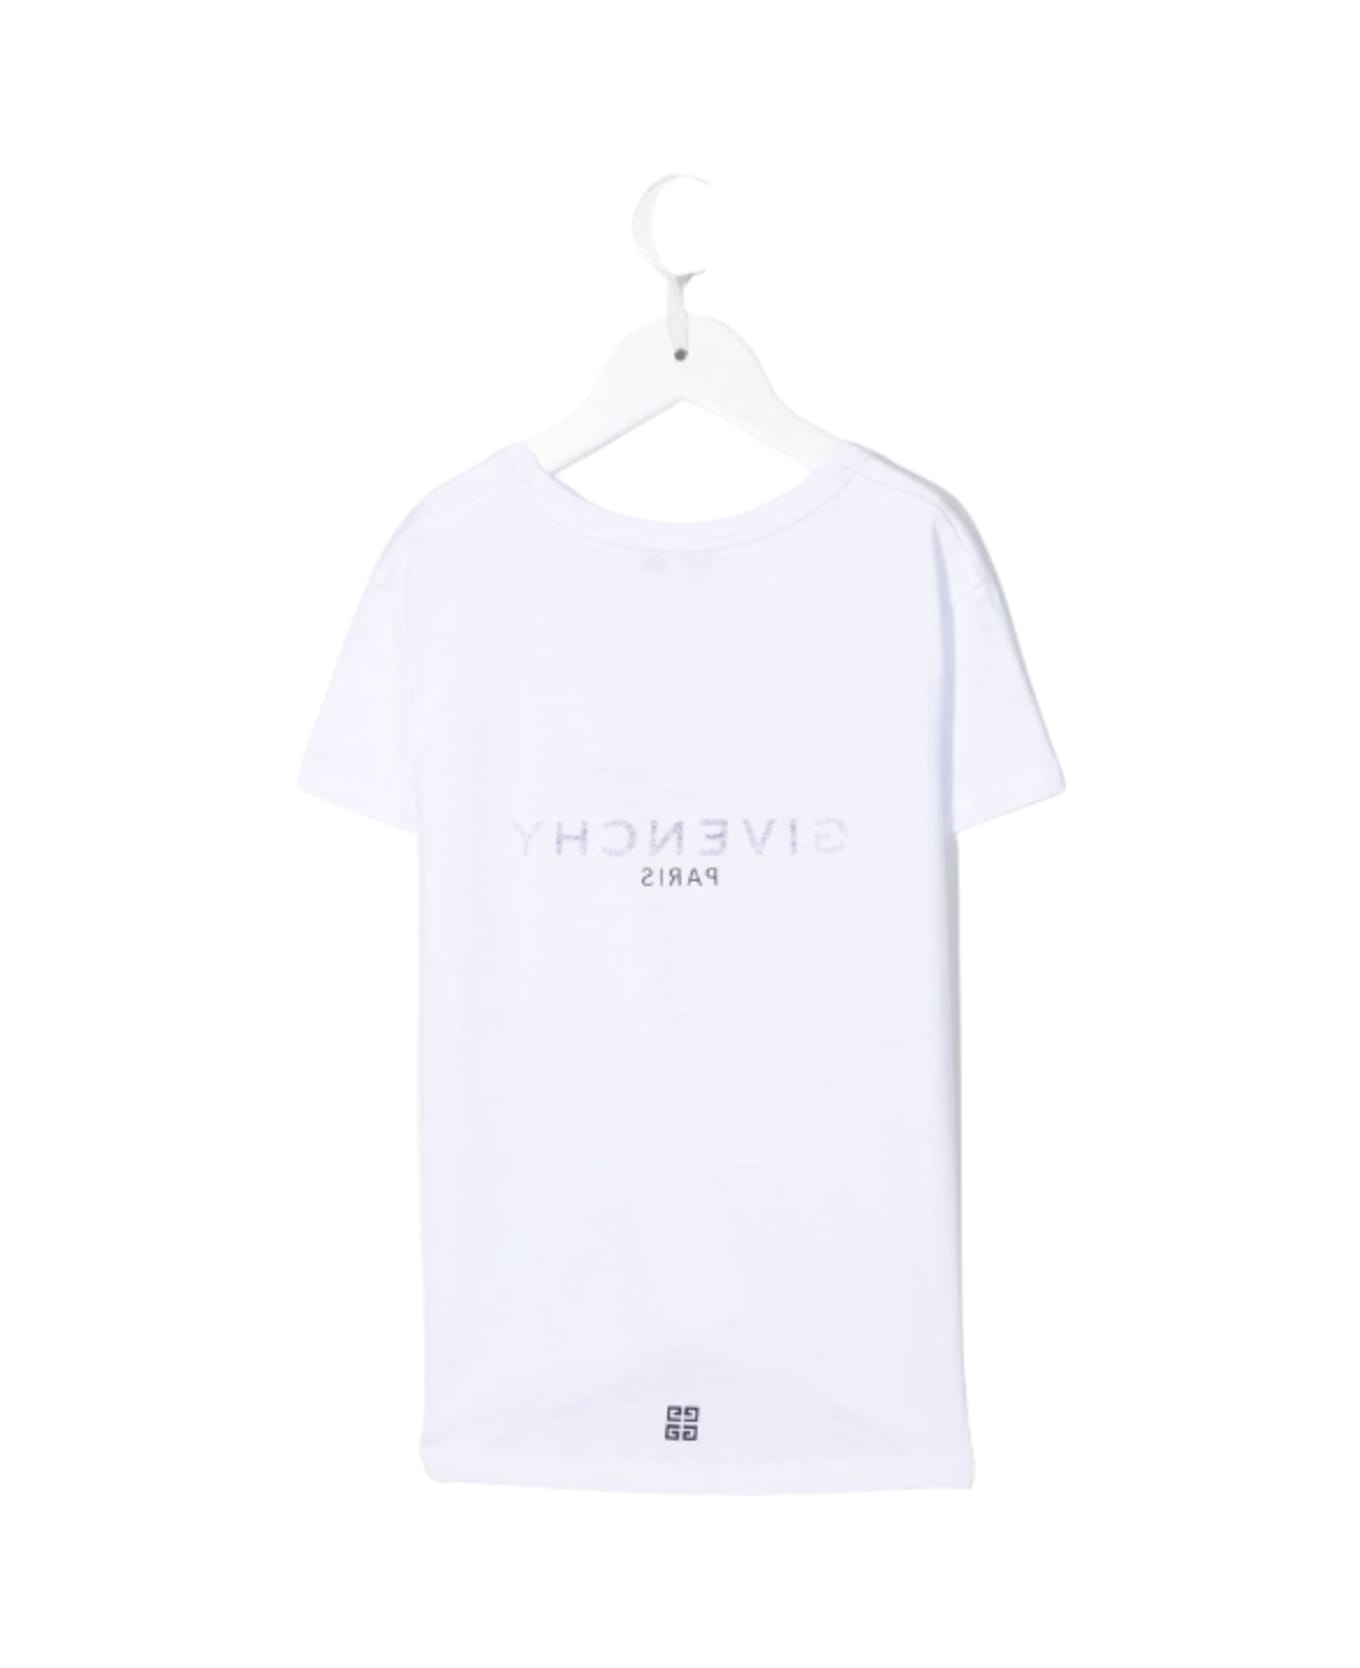 Givenchy Kids Girl's White Cotton T-shirt With Logo - White